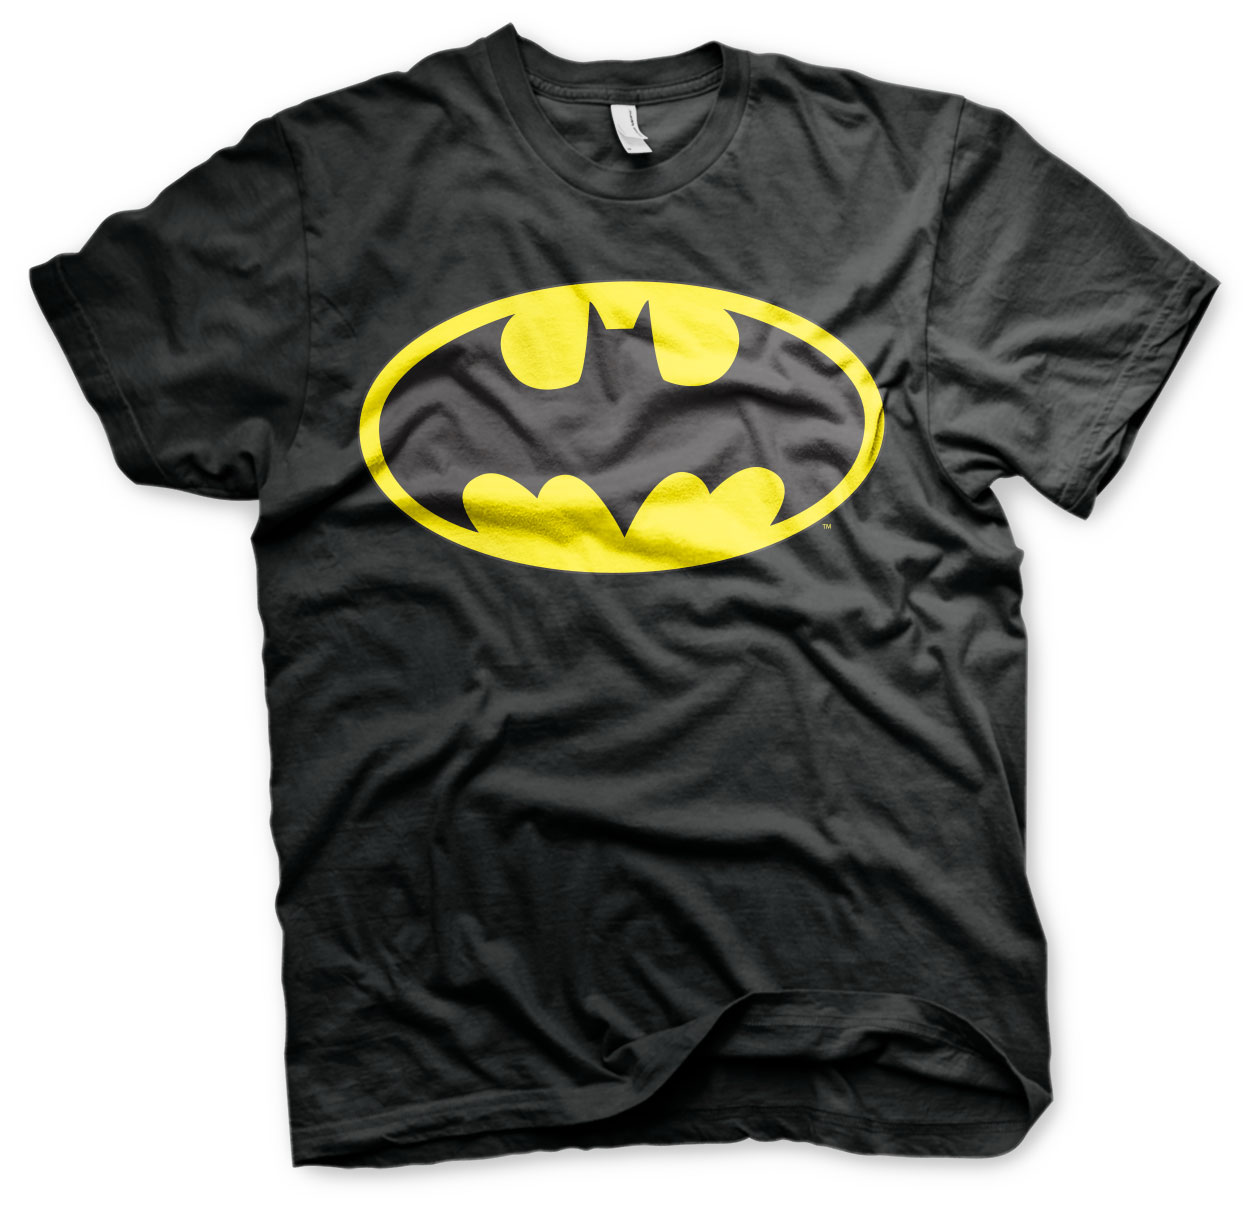 Batman Signal Logo T-Shirt